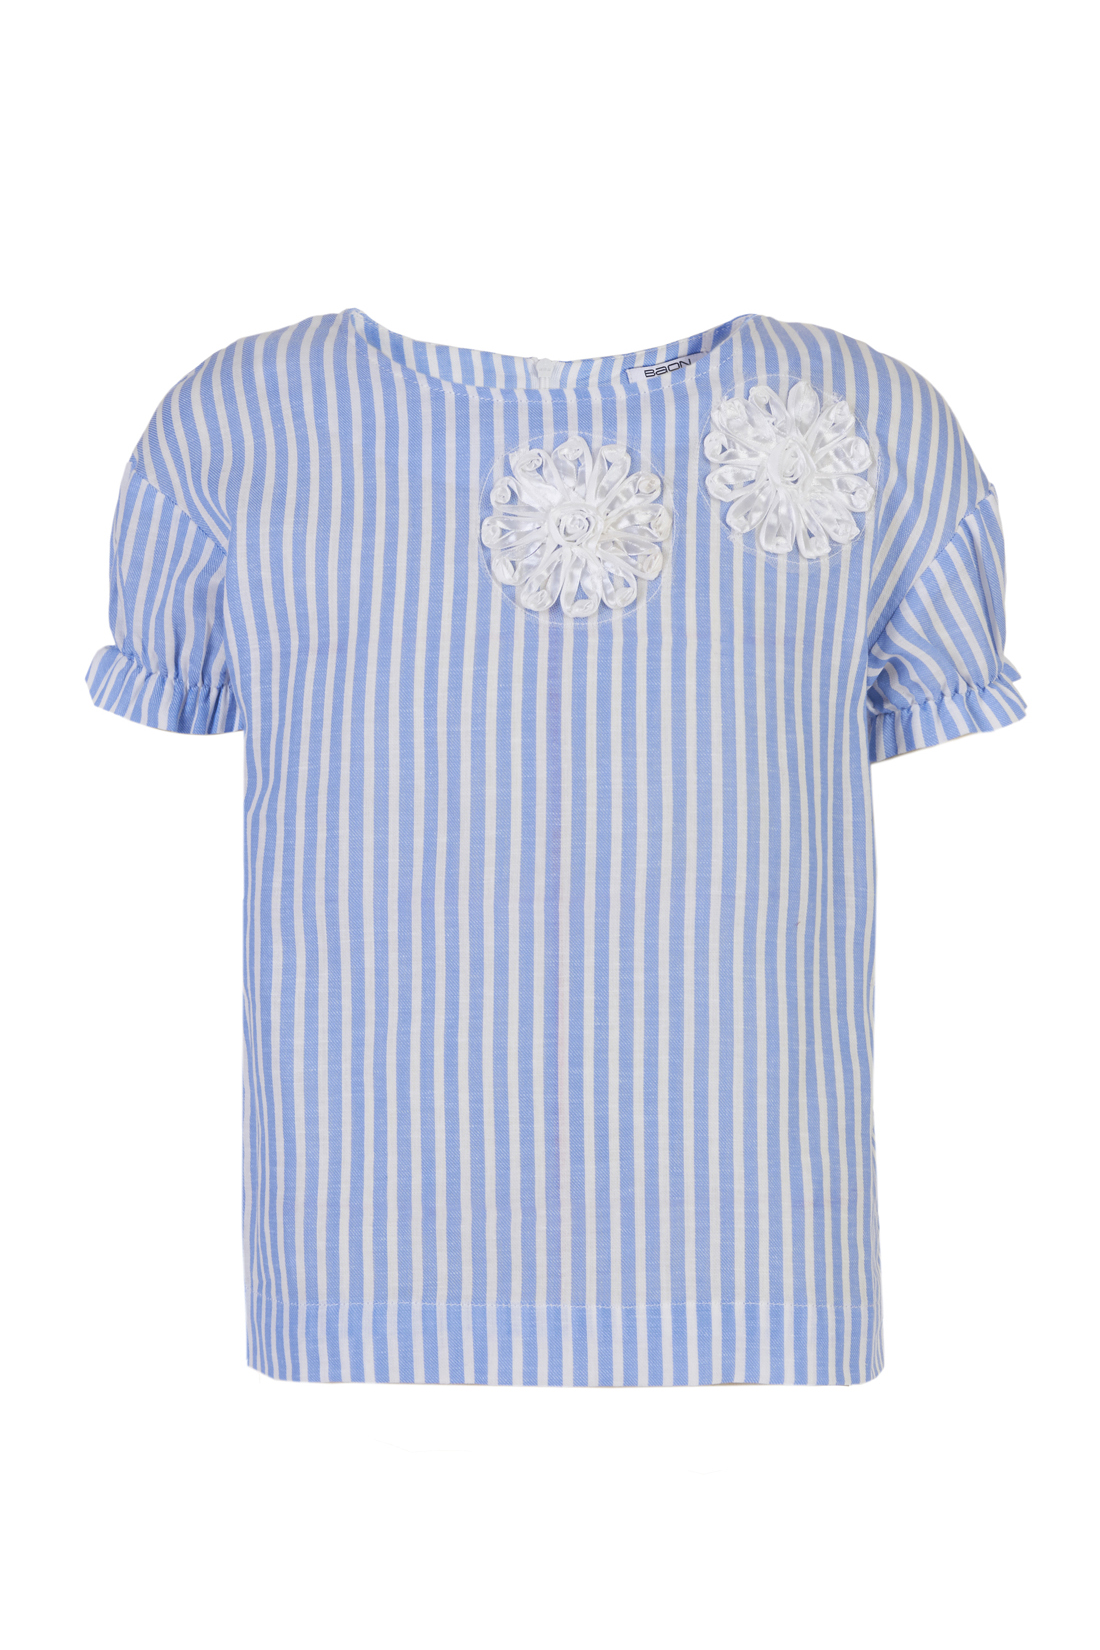 Блузка для девочки (арт. baon BJ198002), размер 134-140, цвет angel blue striped#голубой Блузка для девочки (арт. baon BJ198002) - фото 3